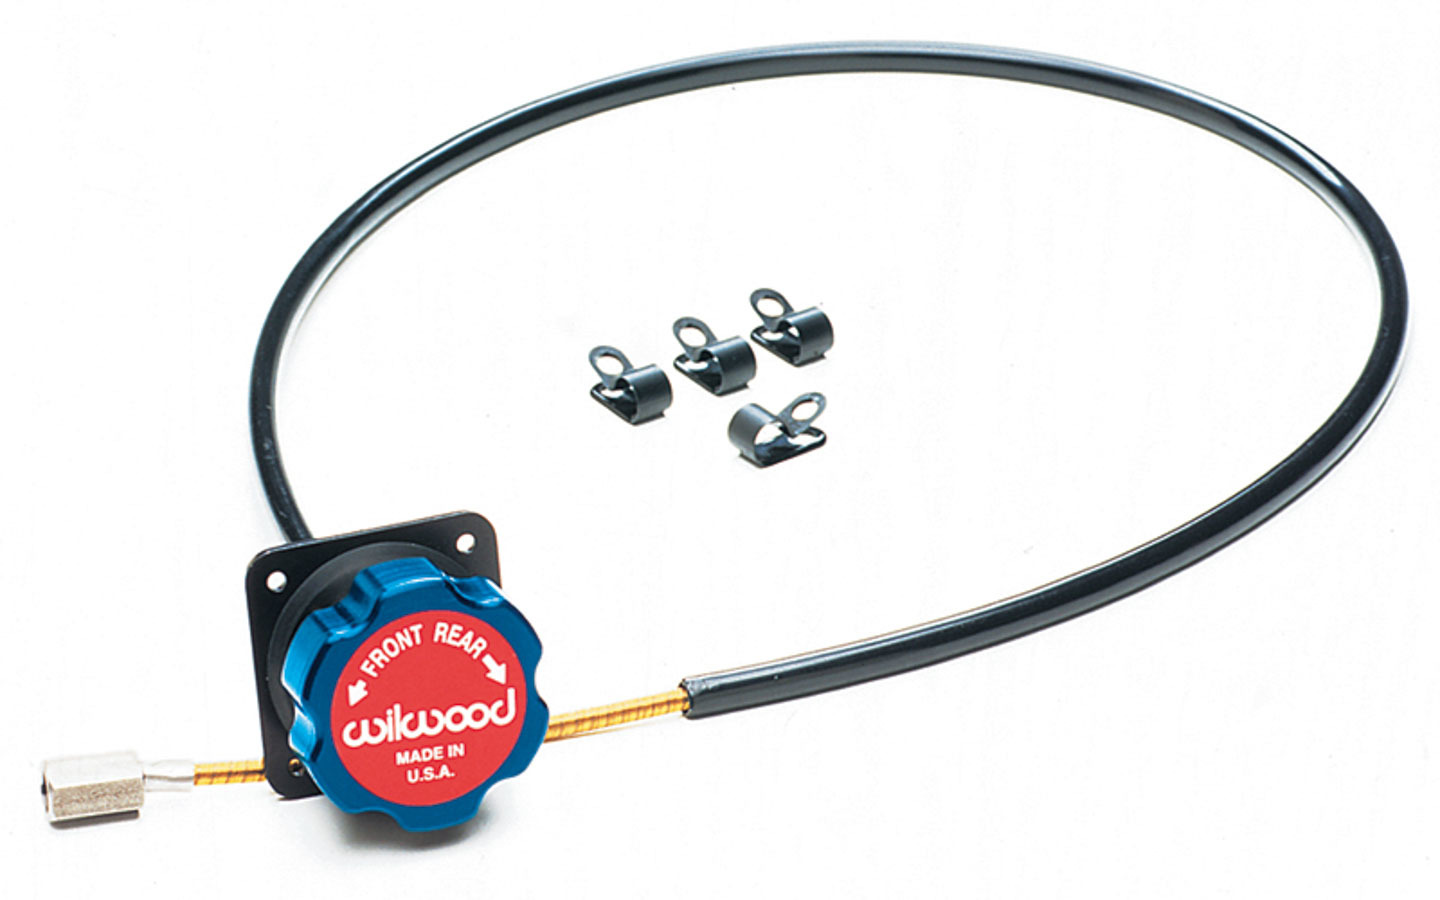 Wilwood 340-4990 Brake Bias Adjuster, Remote, 3/8-24 in Thread, 5 ft Cable / Housing, Panel Mount, Knob Adjuster, Kit